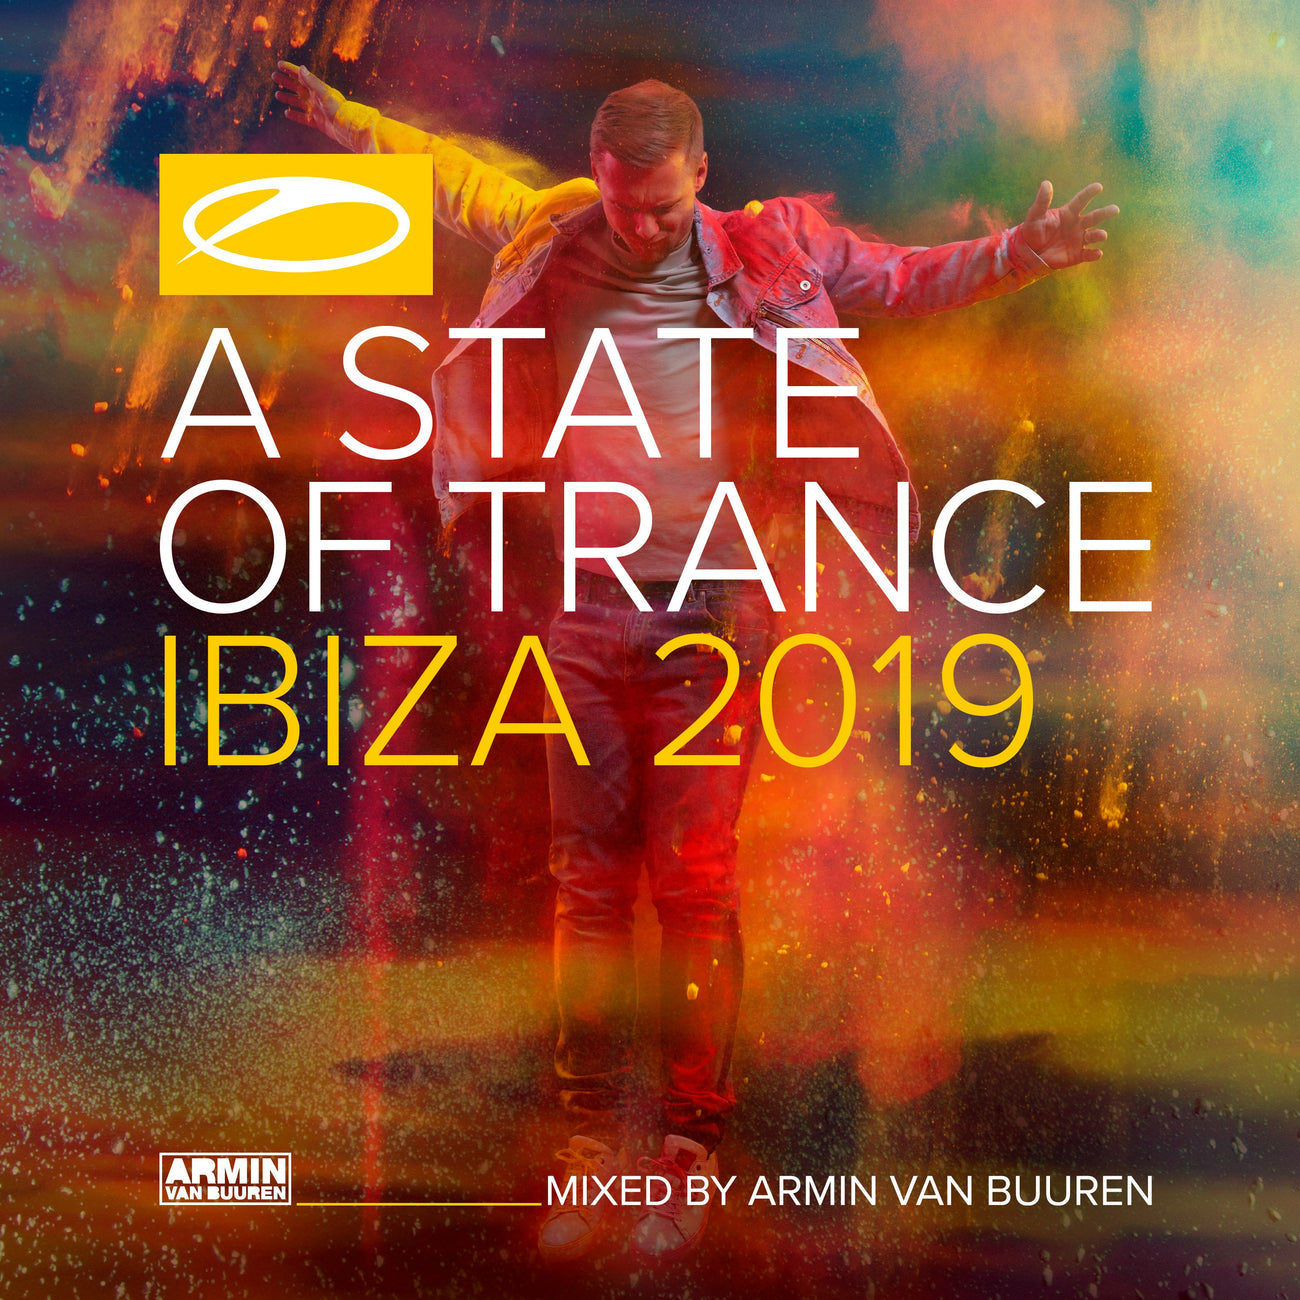 A State Of Trance, Ibiza 2019 (Mixed by Armin van Buuren)